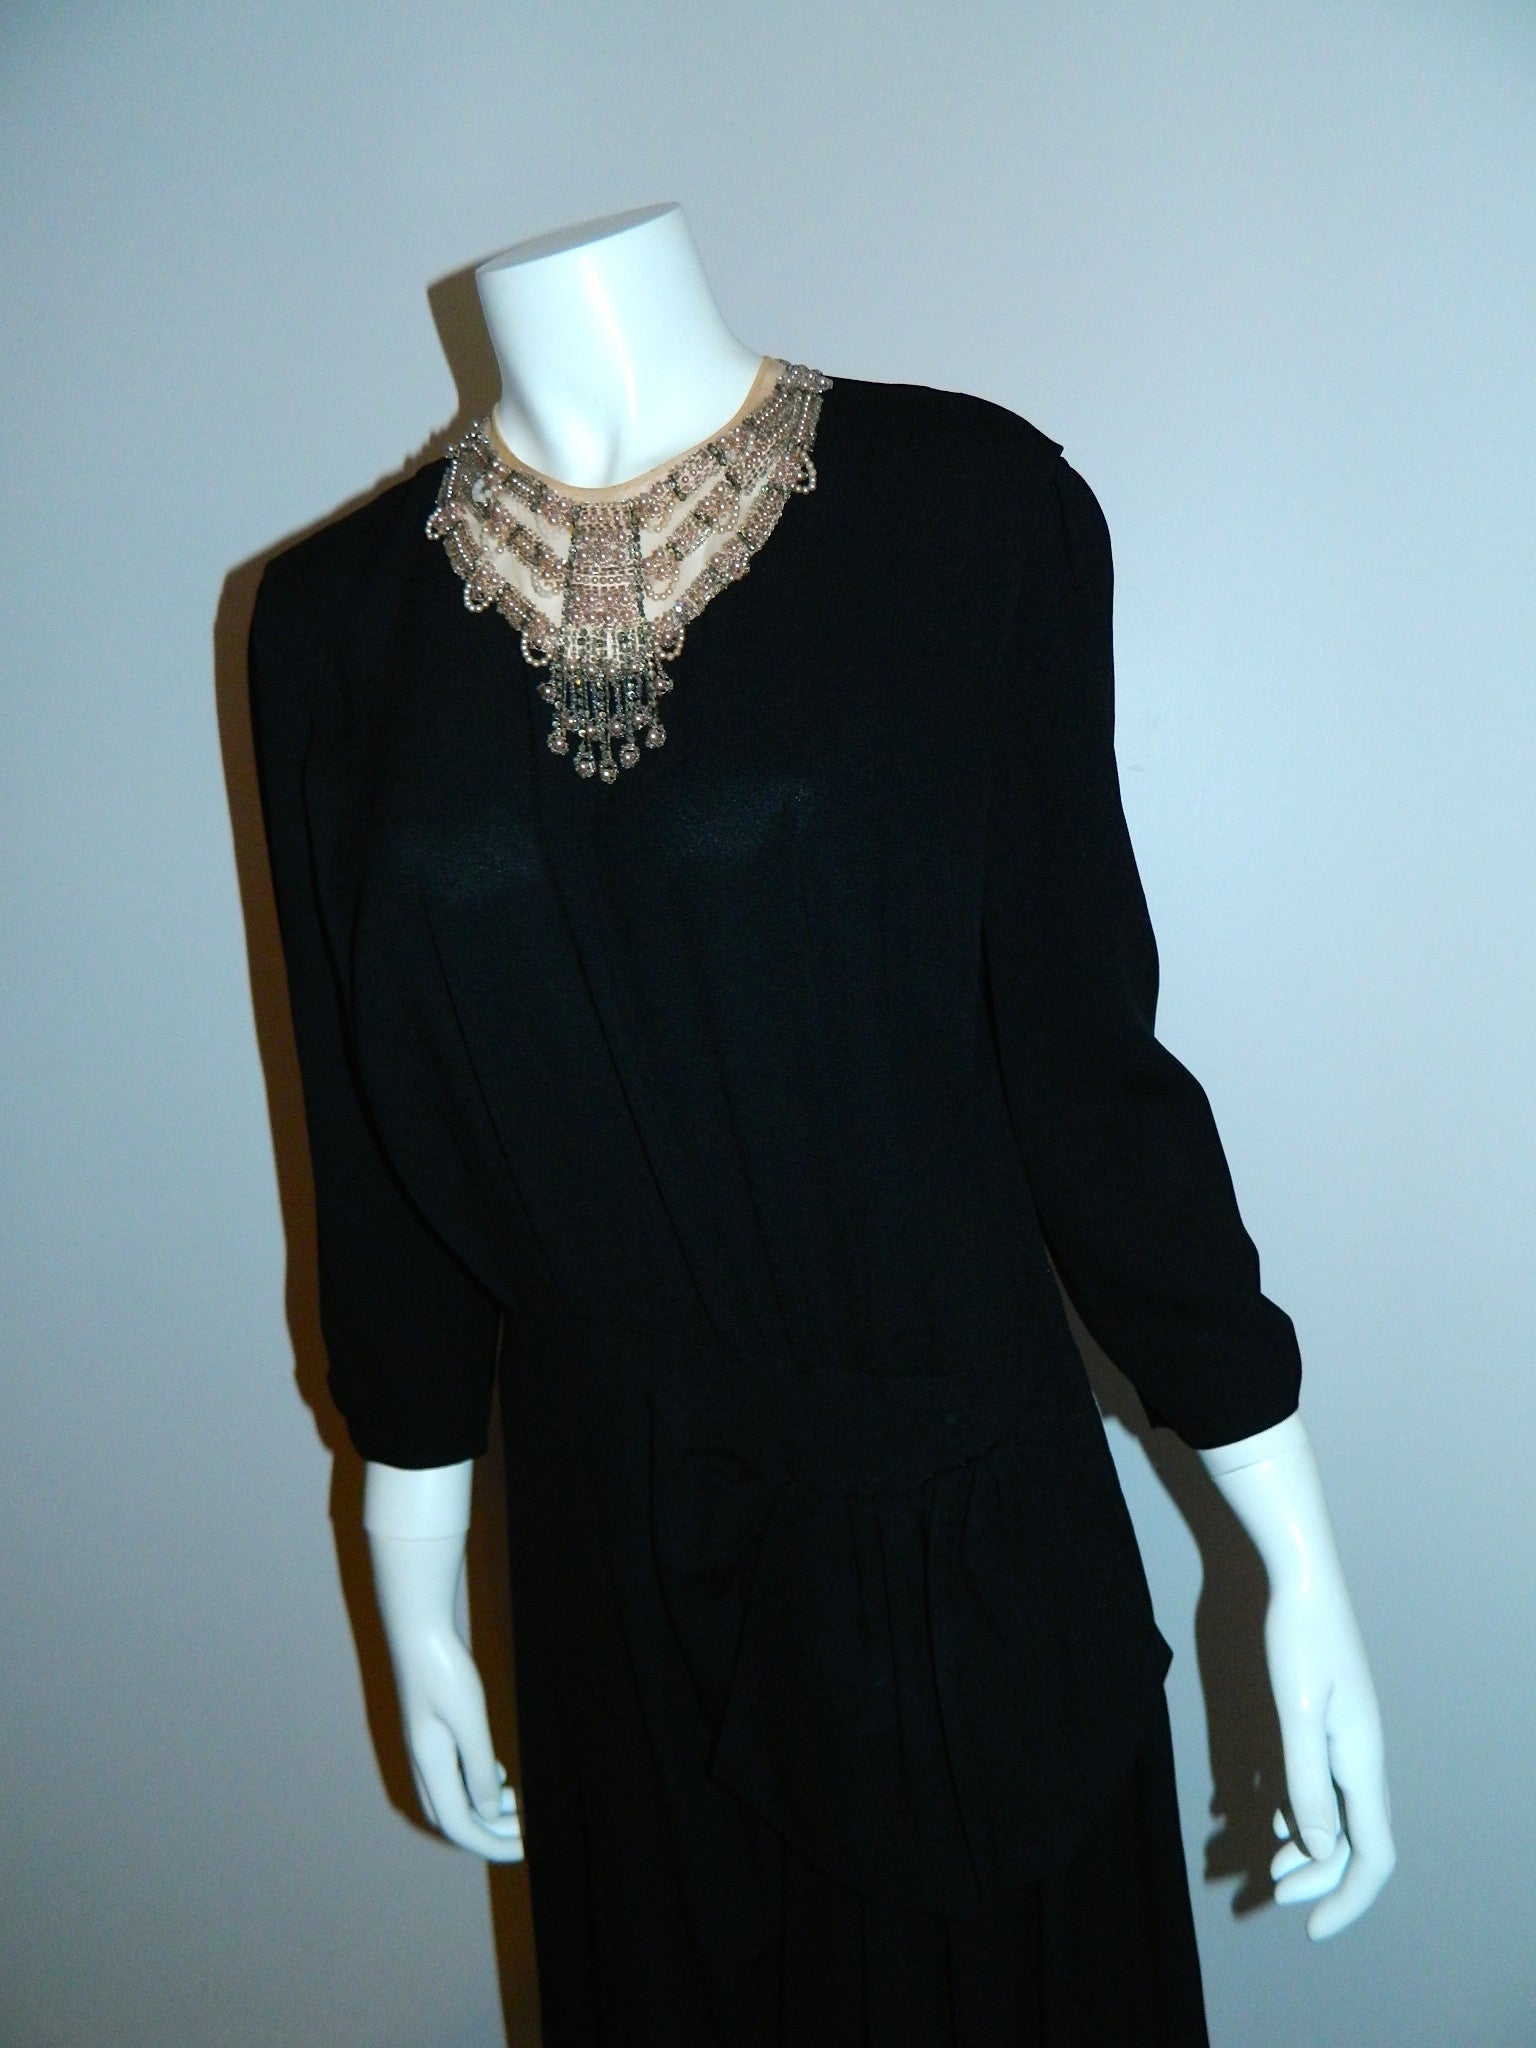 vintage 1930s black crepe dress / Art Deco beaded neckline / rayon crepe cocktail dress M - L